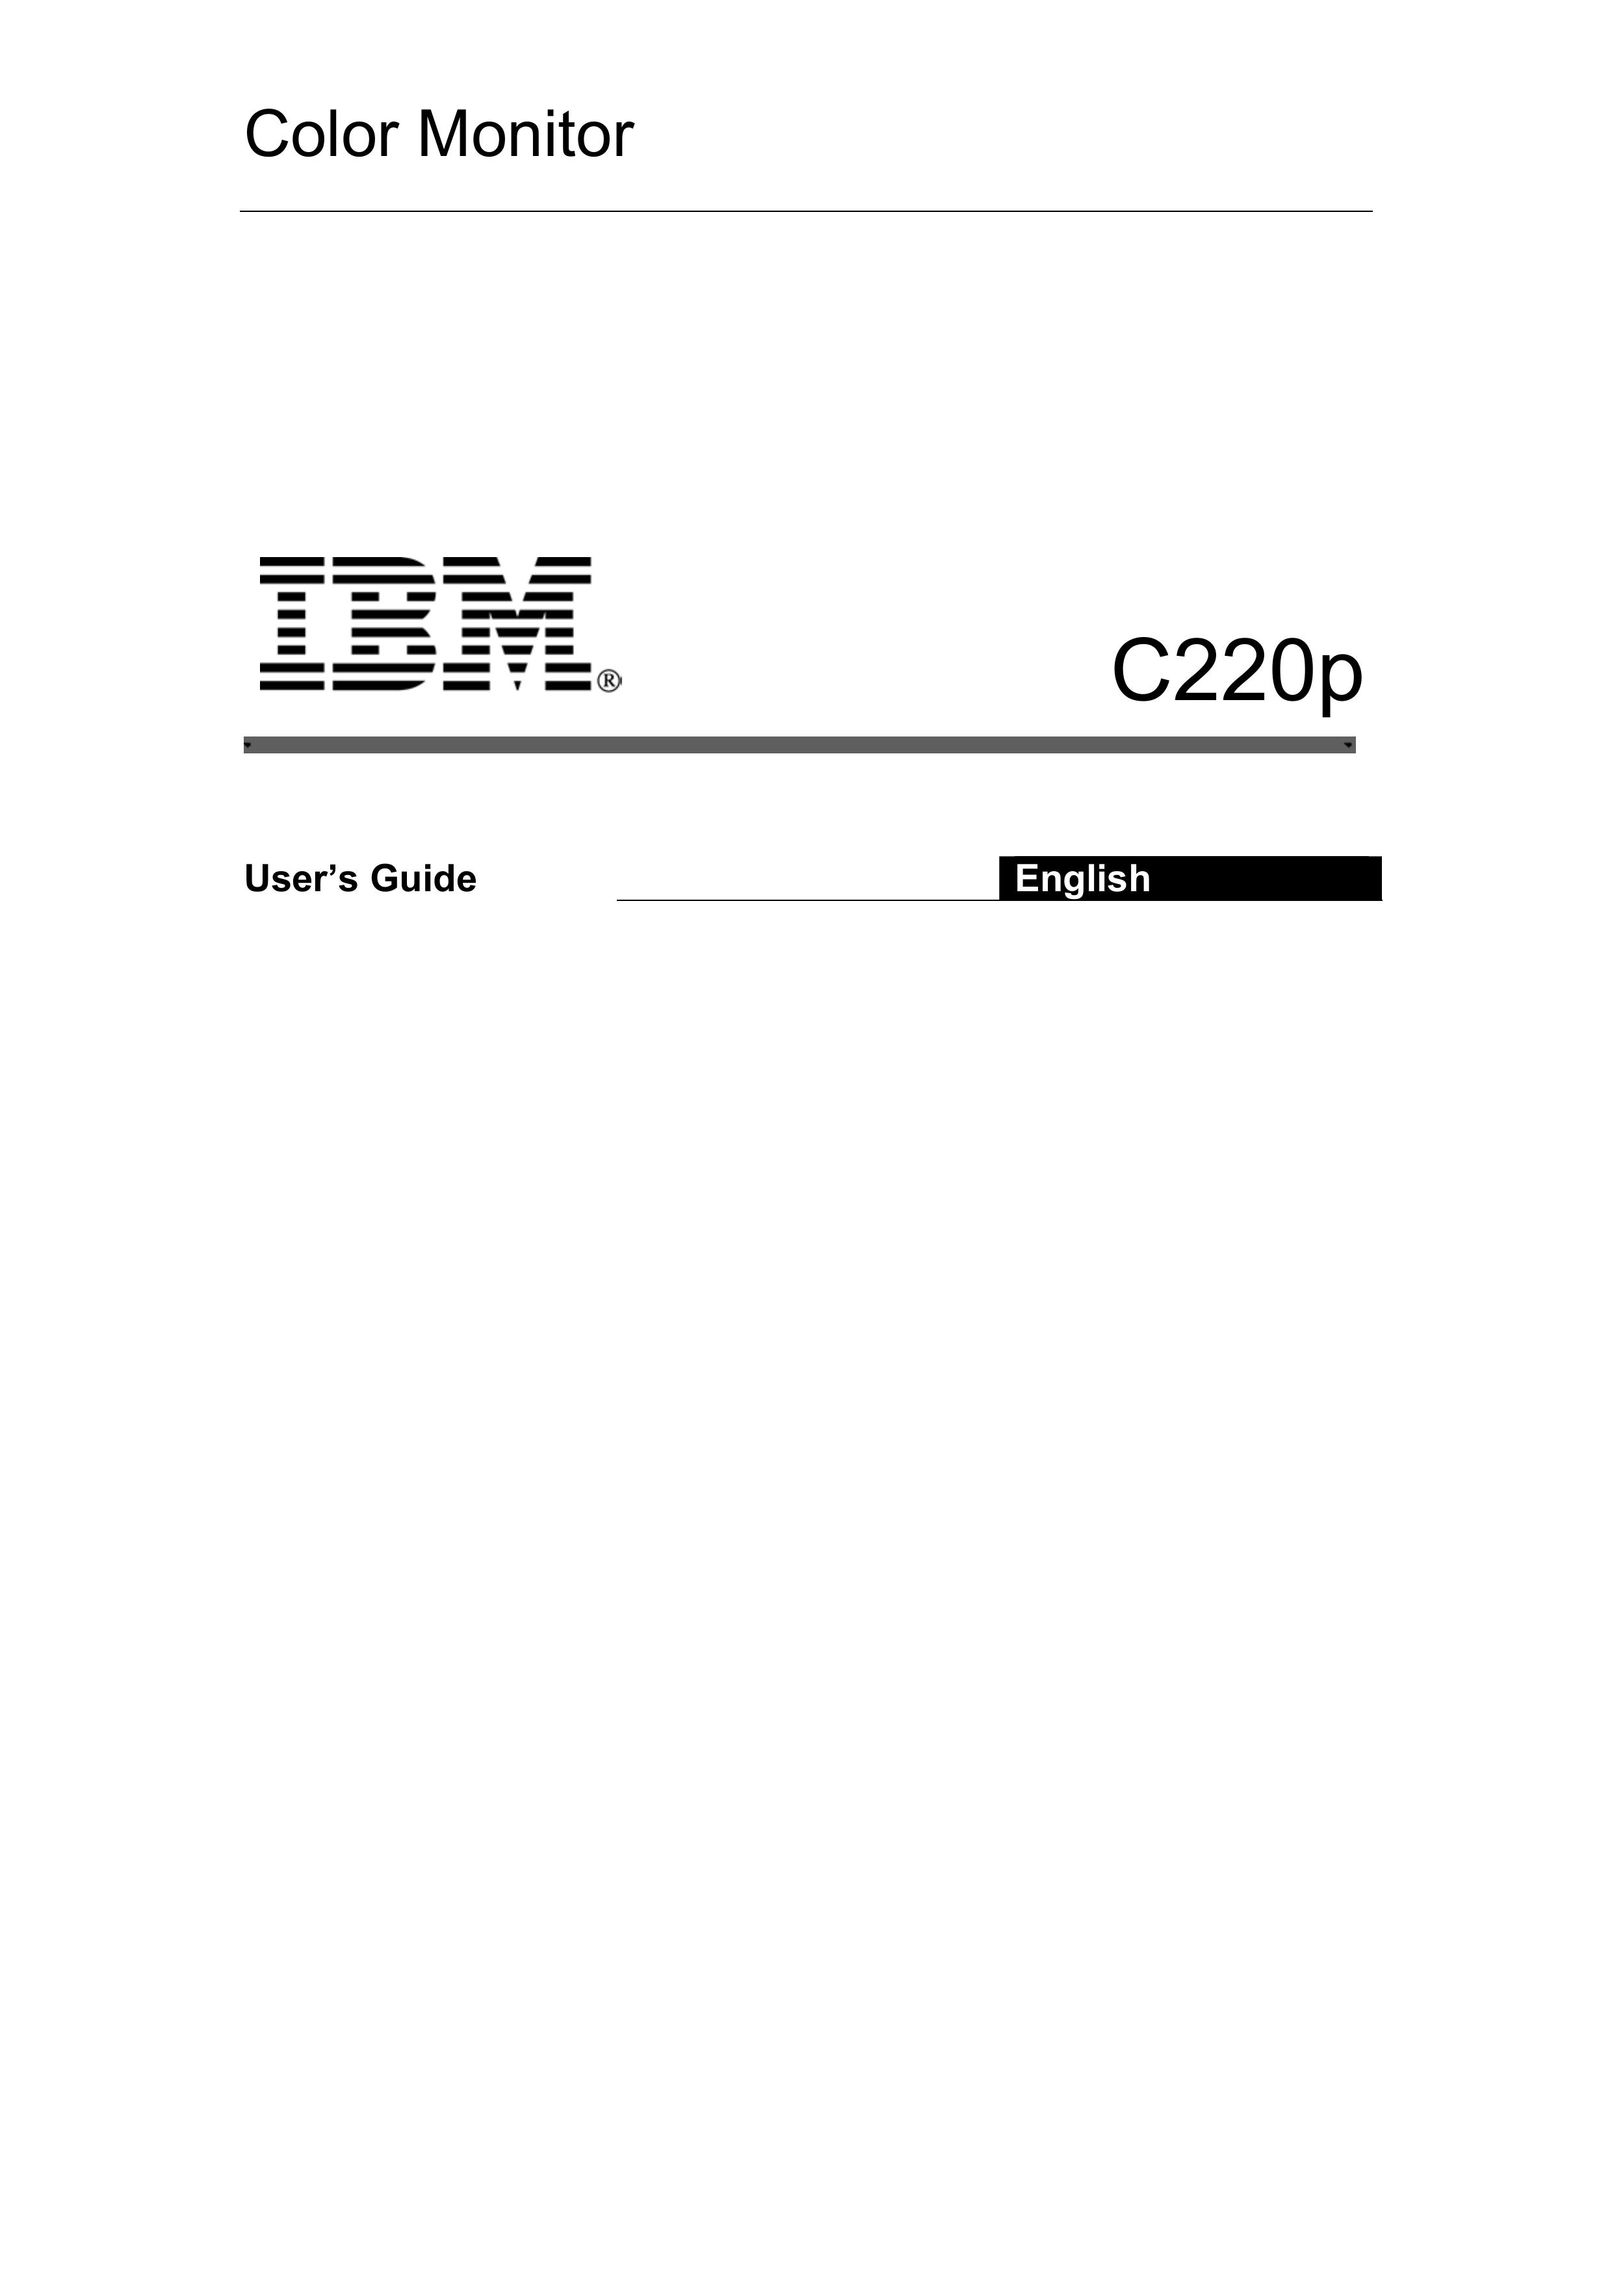 IBM C220p Computer Monitor User Manual